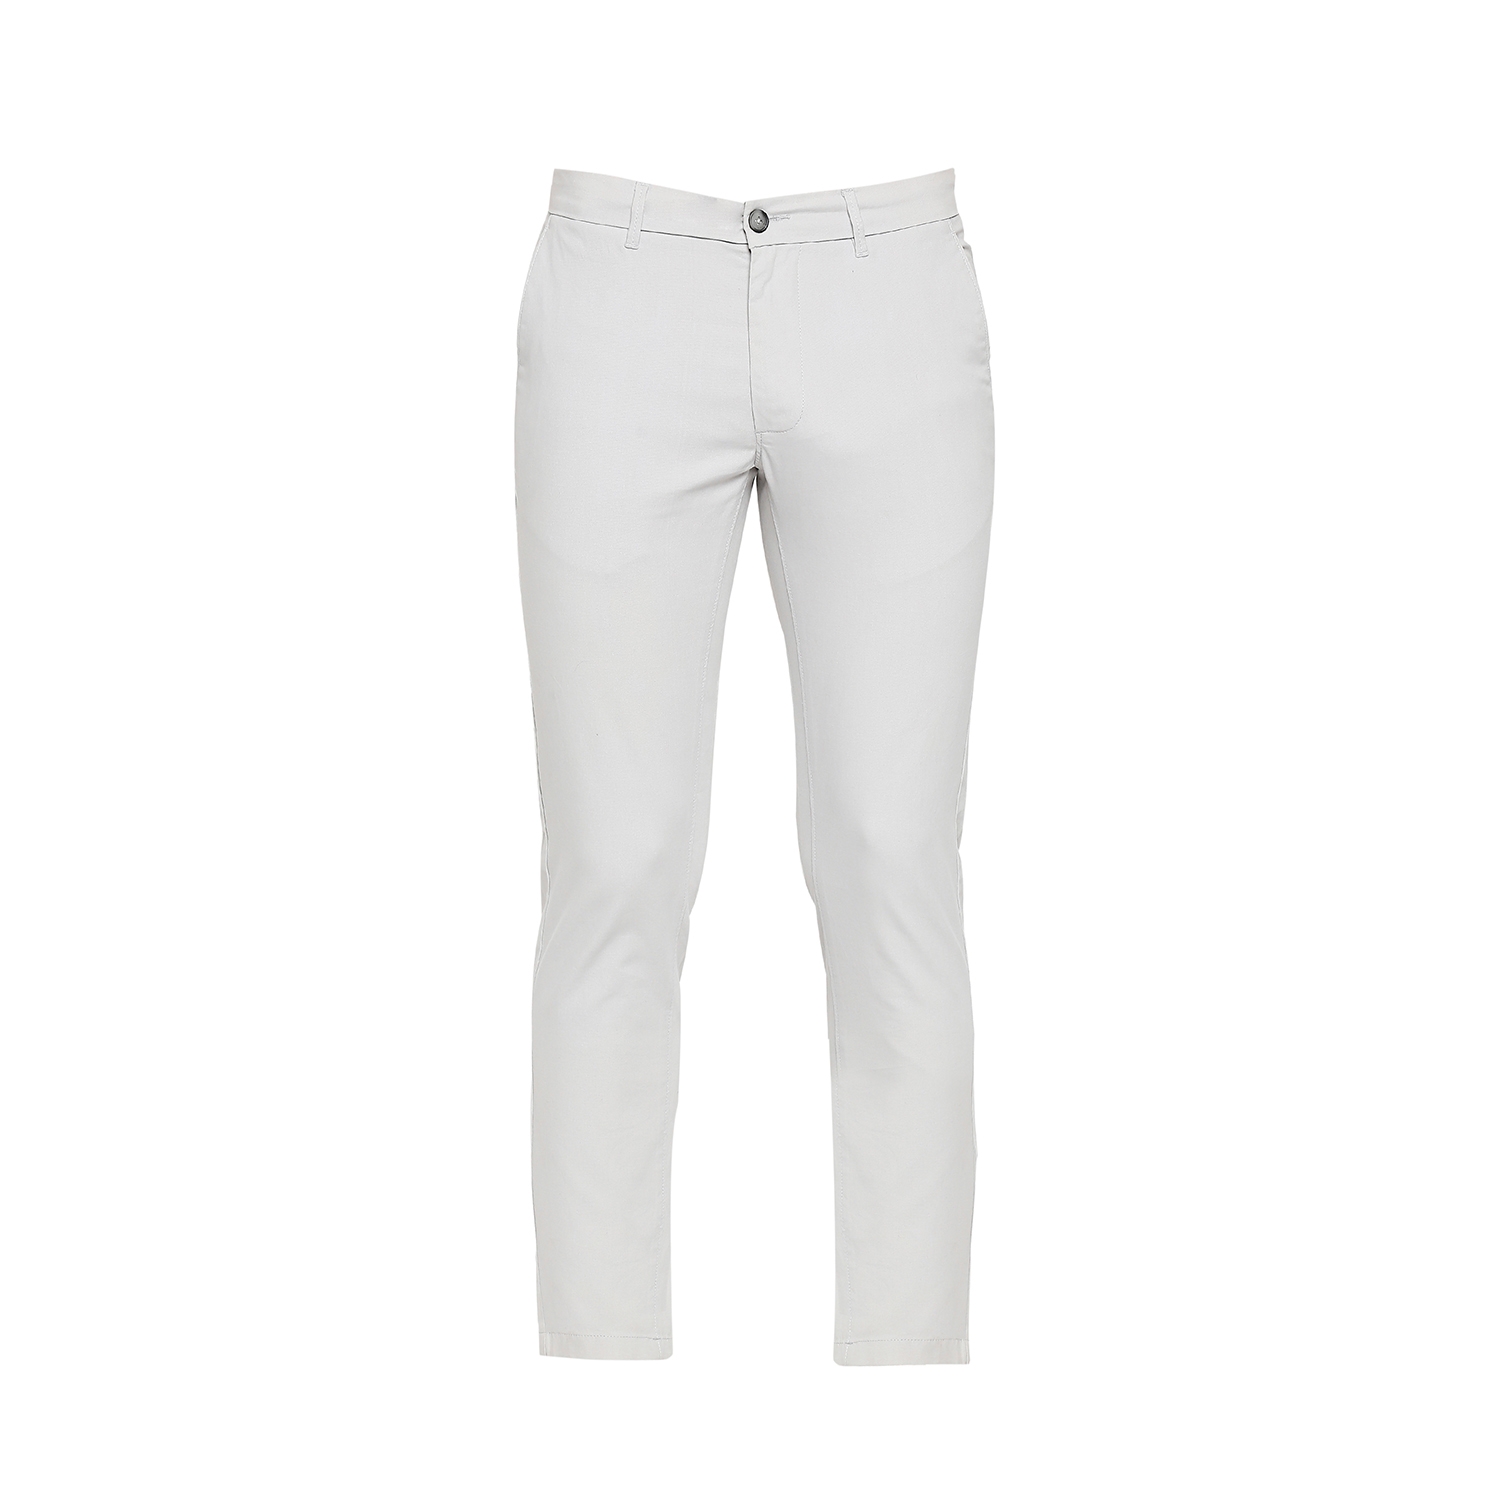 Basics | Men's Light Grey Cotton Blend Solid Trouser 5